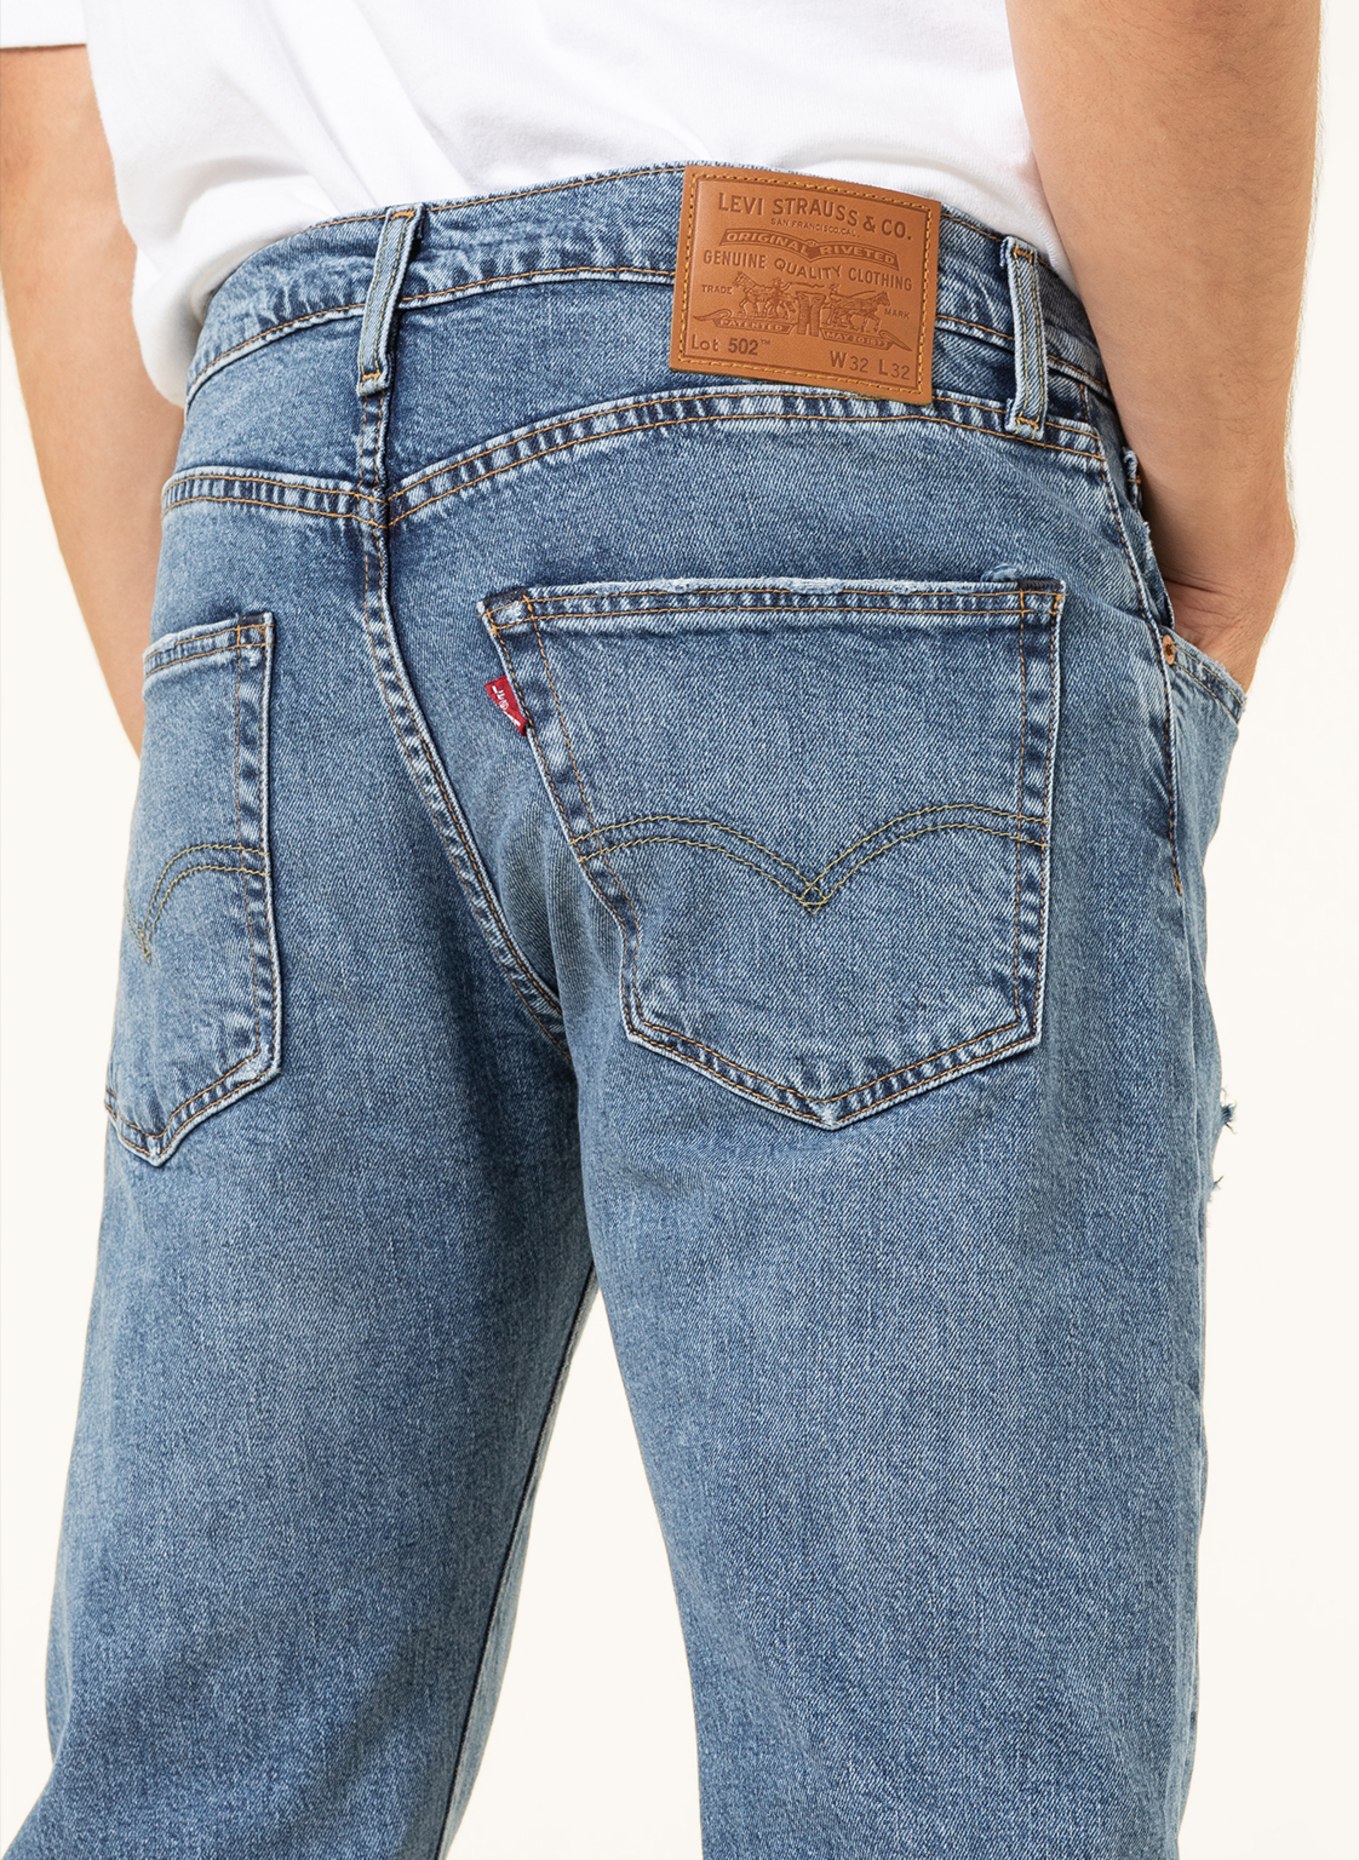 Levi's® Destroyed jeans slim 502 tapered fit, Color: 00 Dark Indigo - Worn In (Image 5)